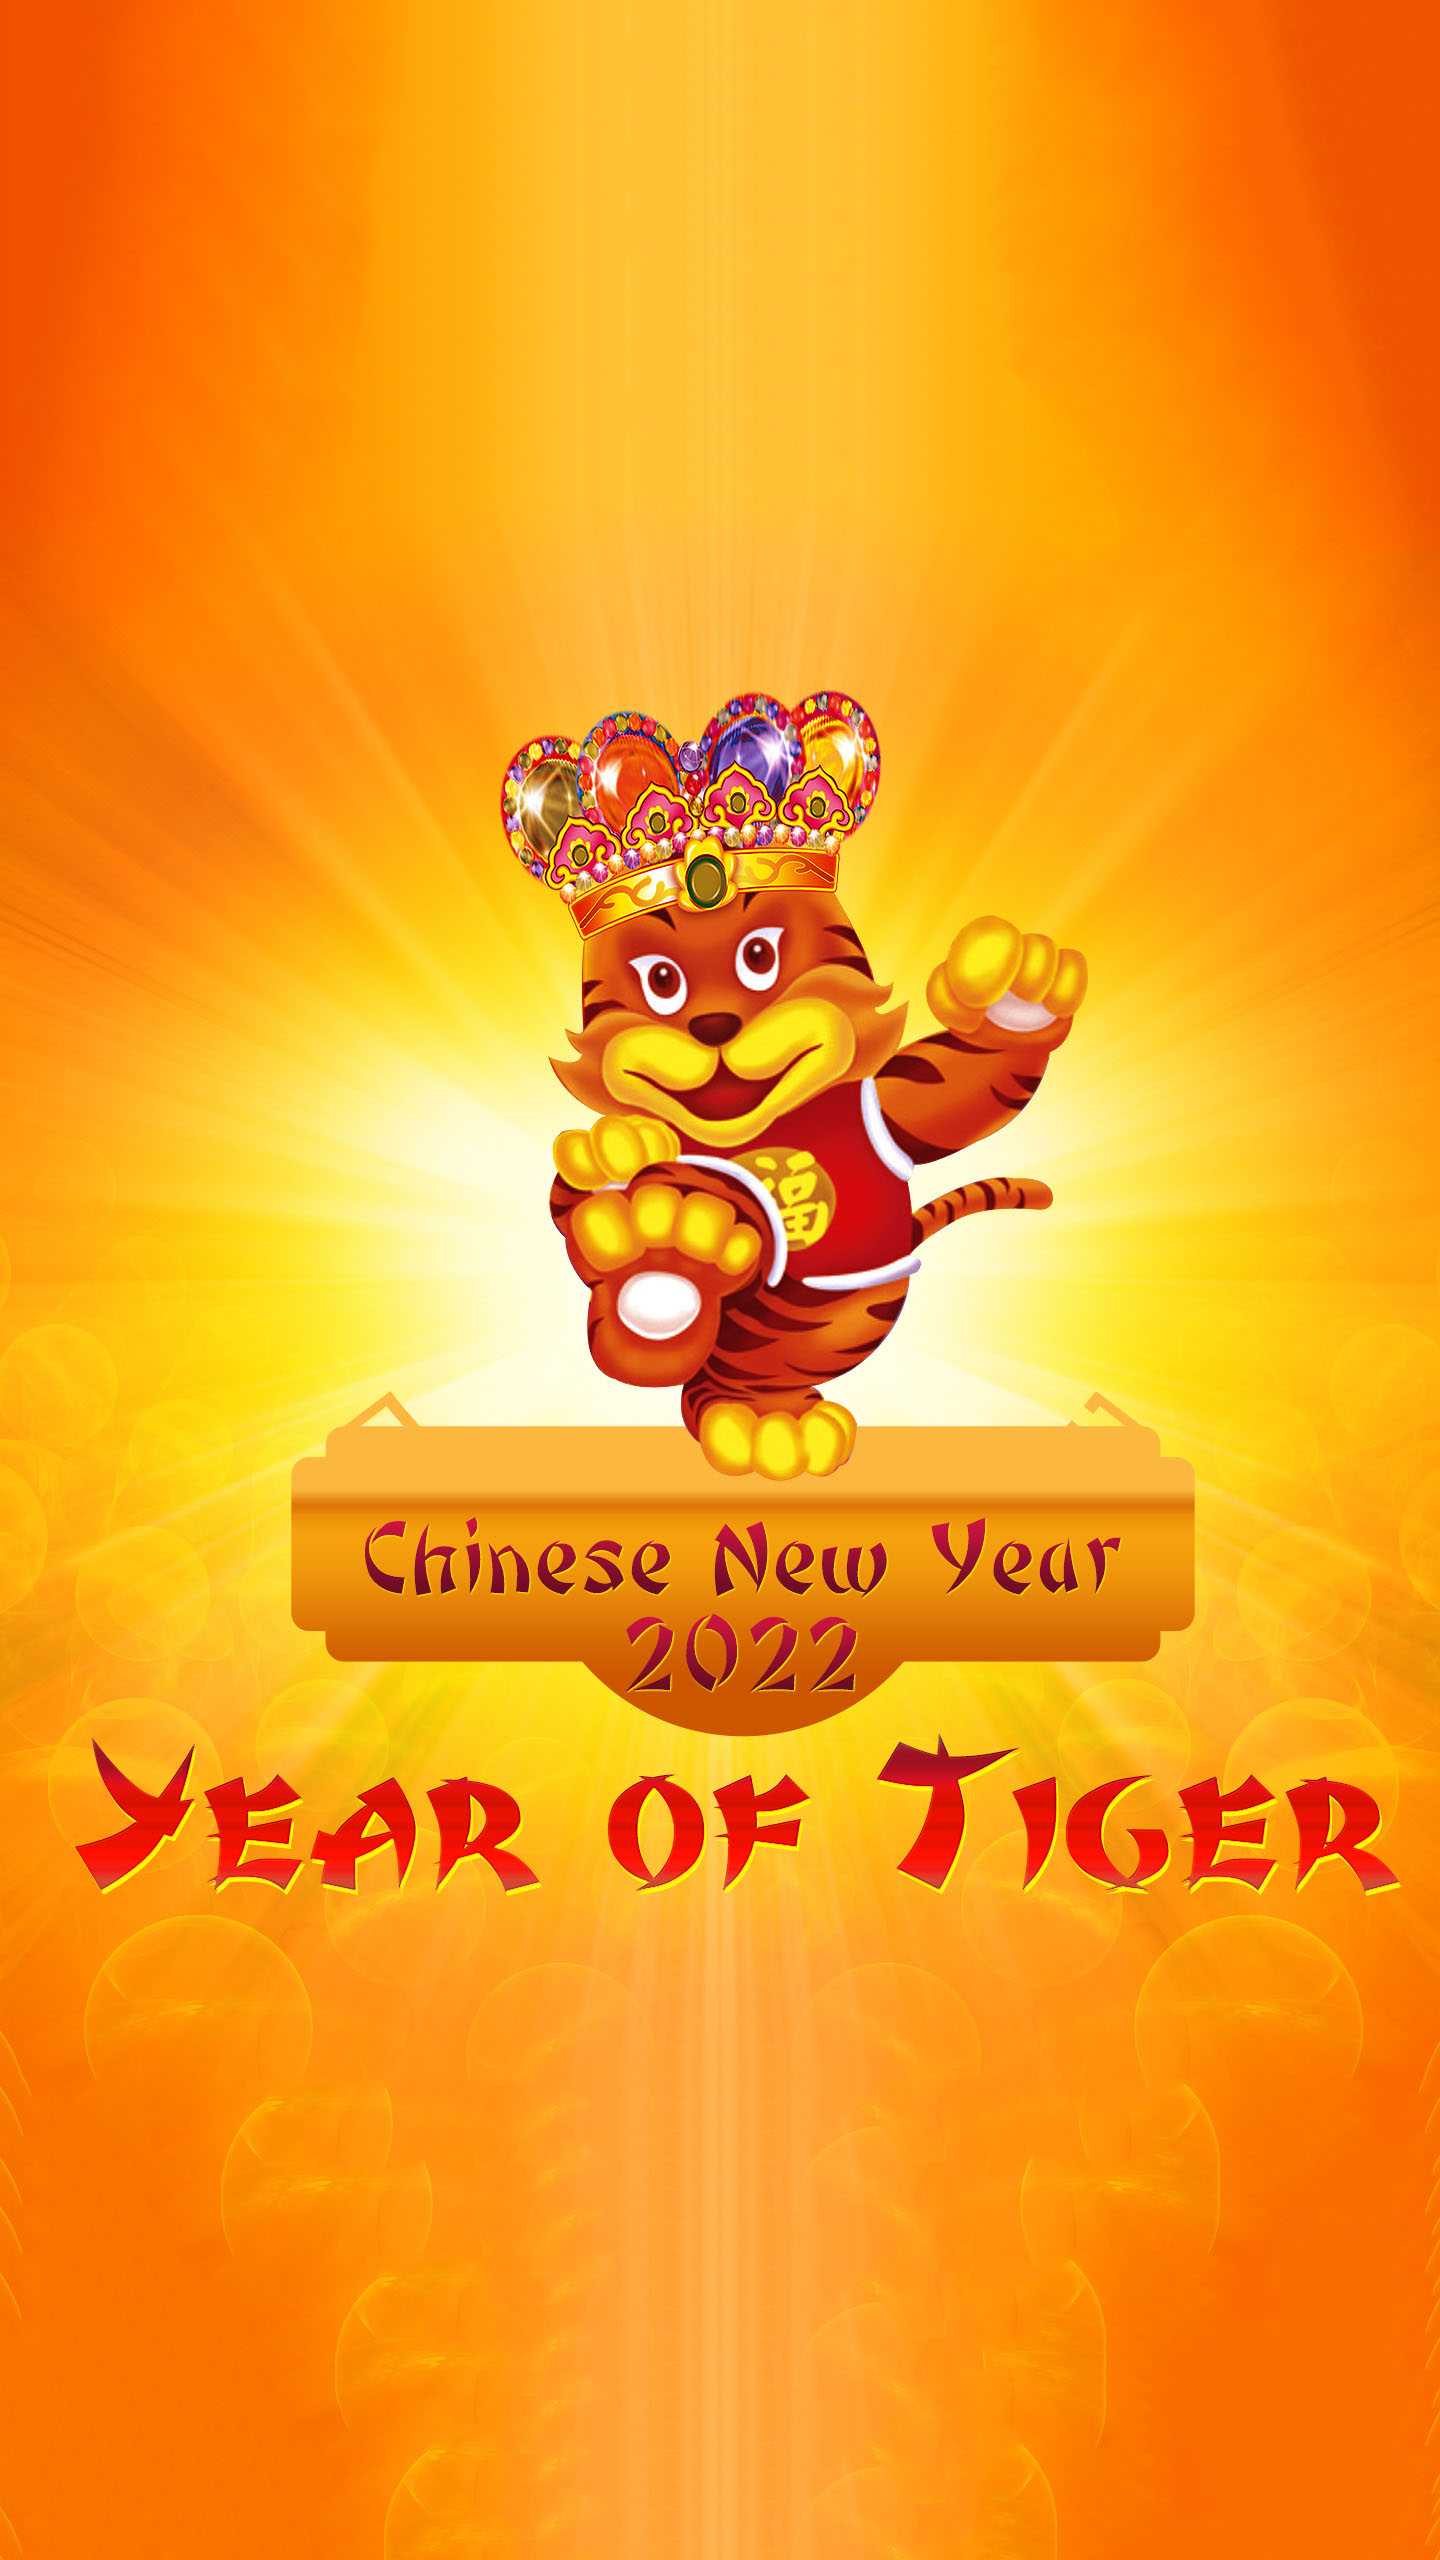 Chinese new year 2022 background